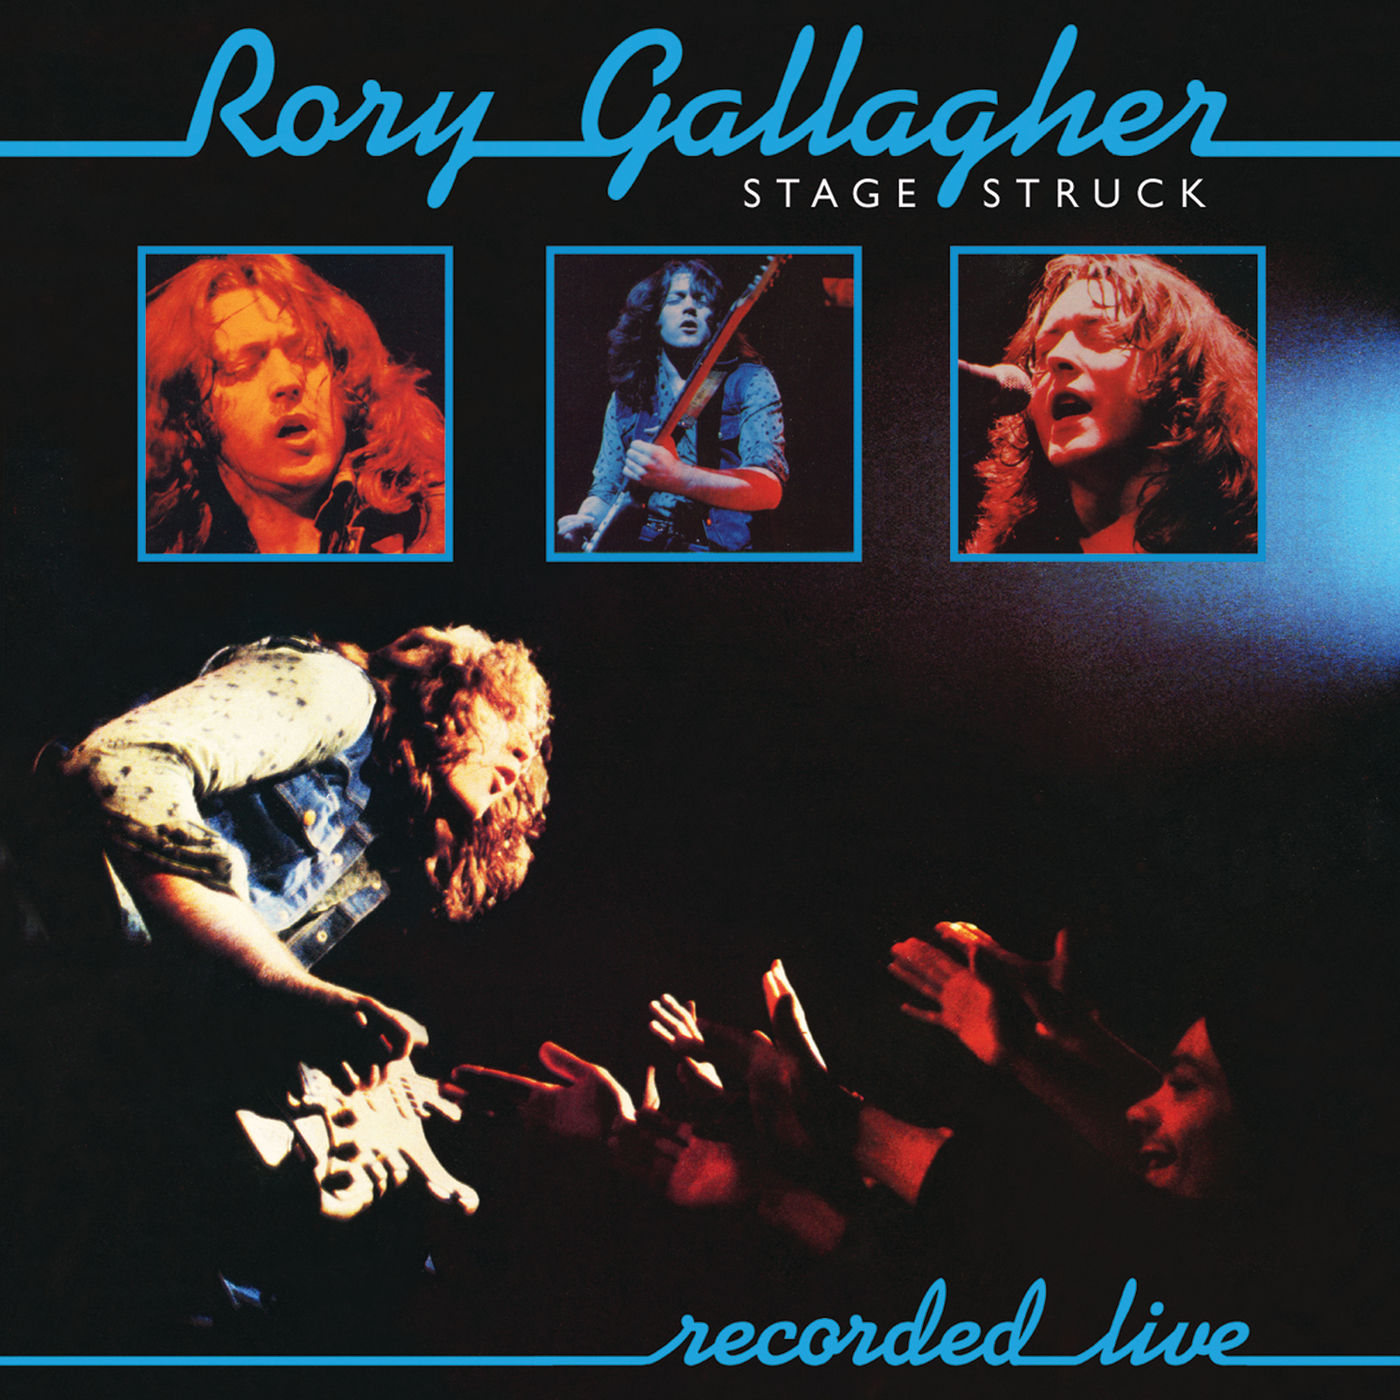 Rory Gallagher - Stage Struck (Remastered) (1980/2020) [FLAC 24bit/96kHz]